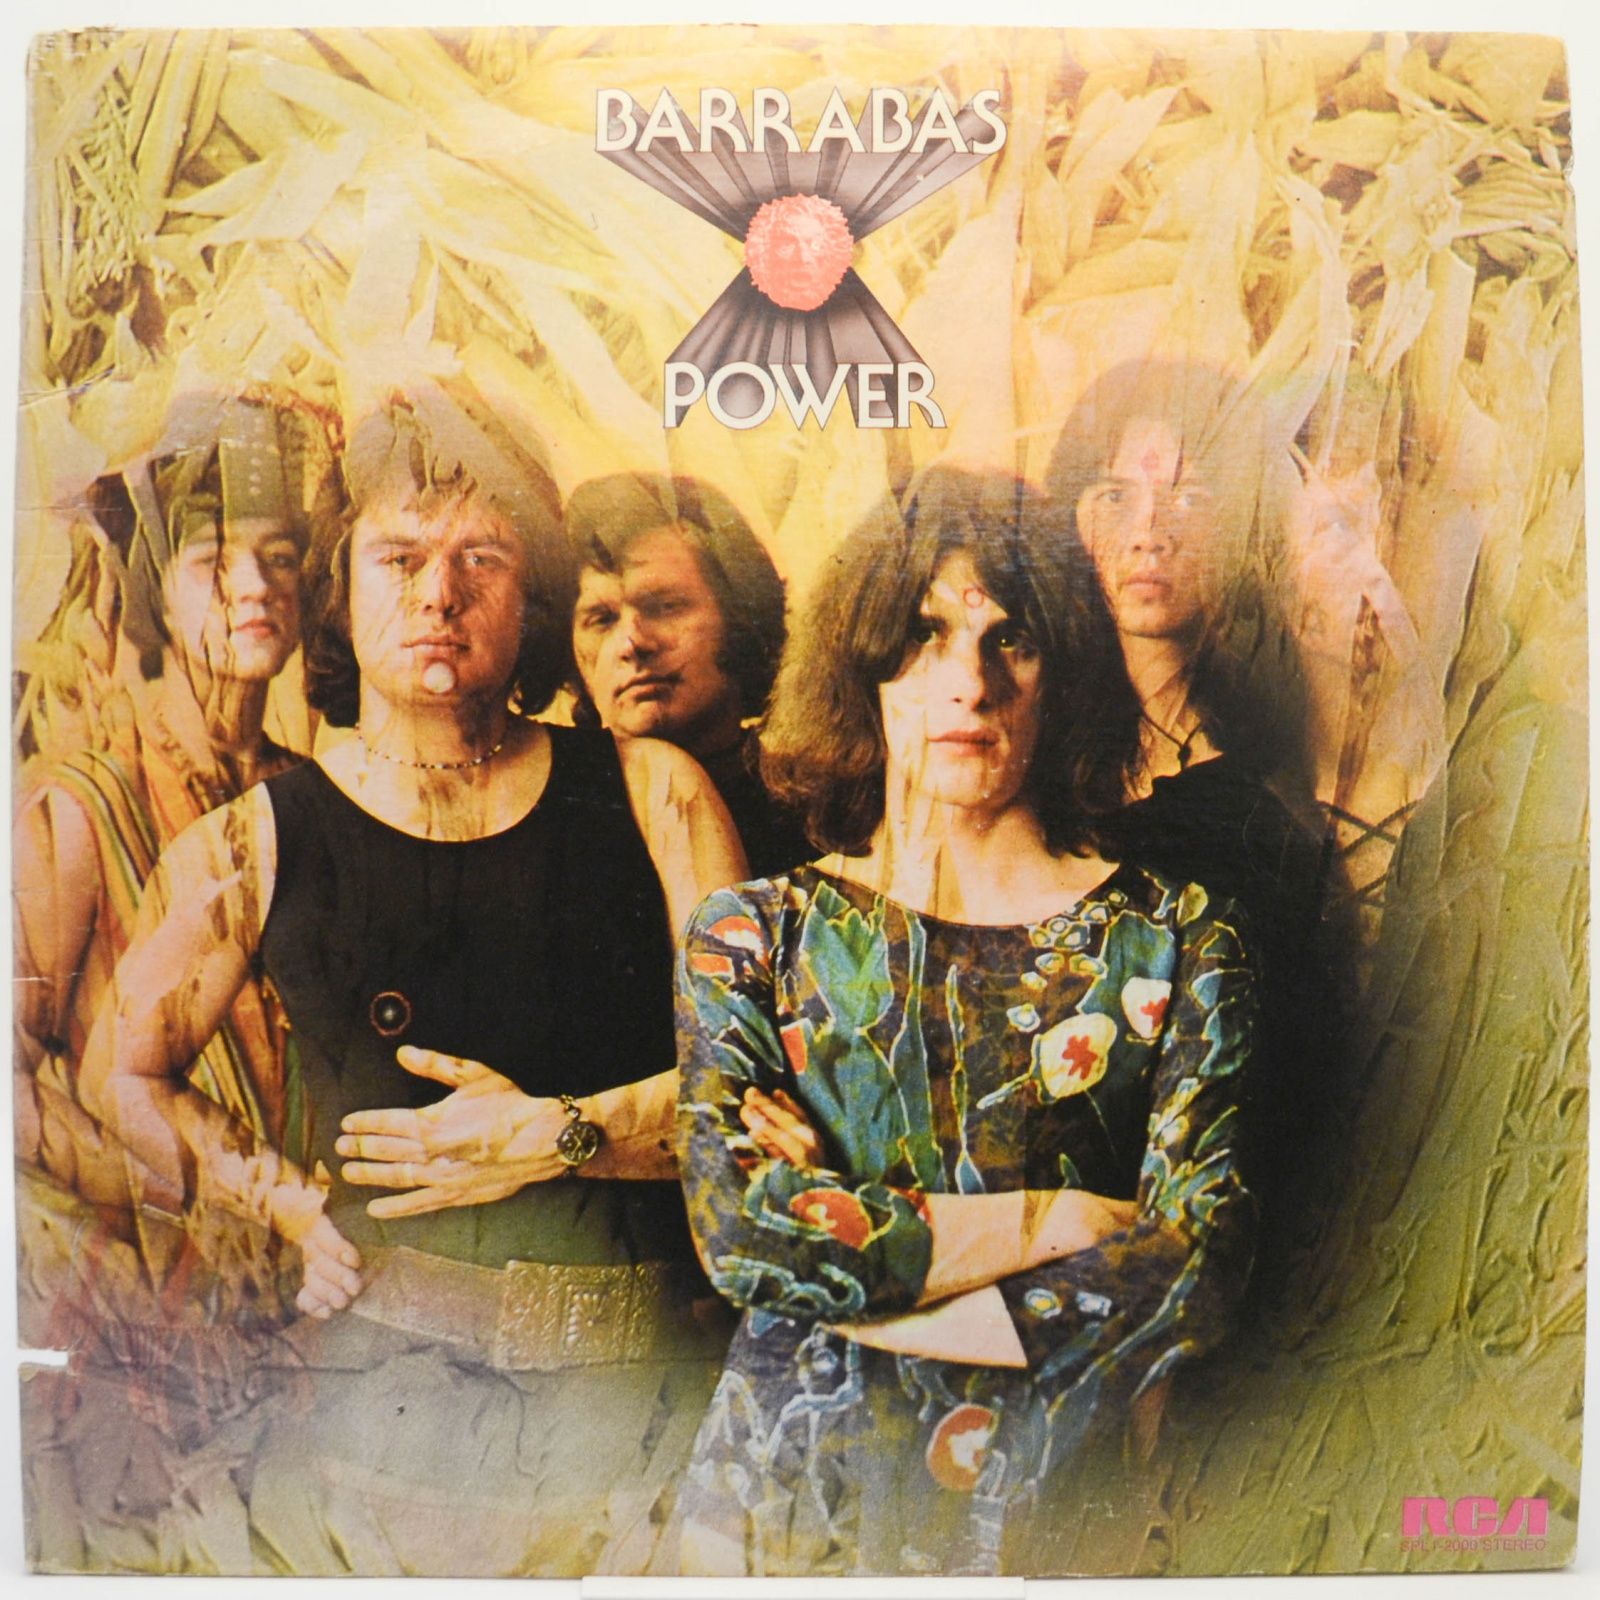 Barrabas — Power, 1973